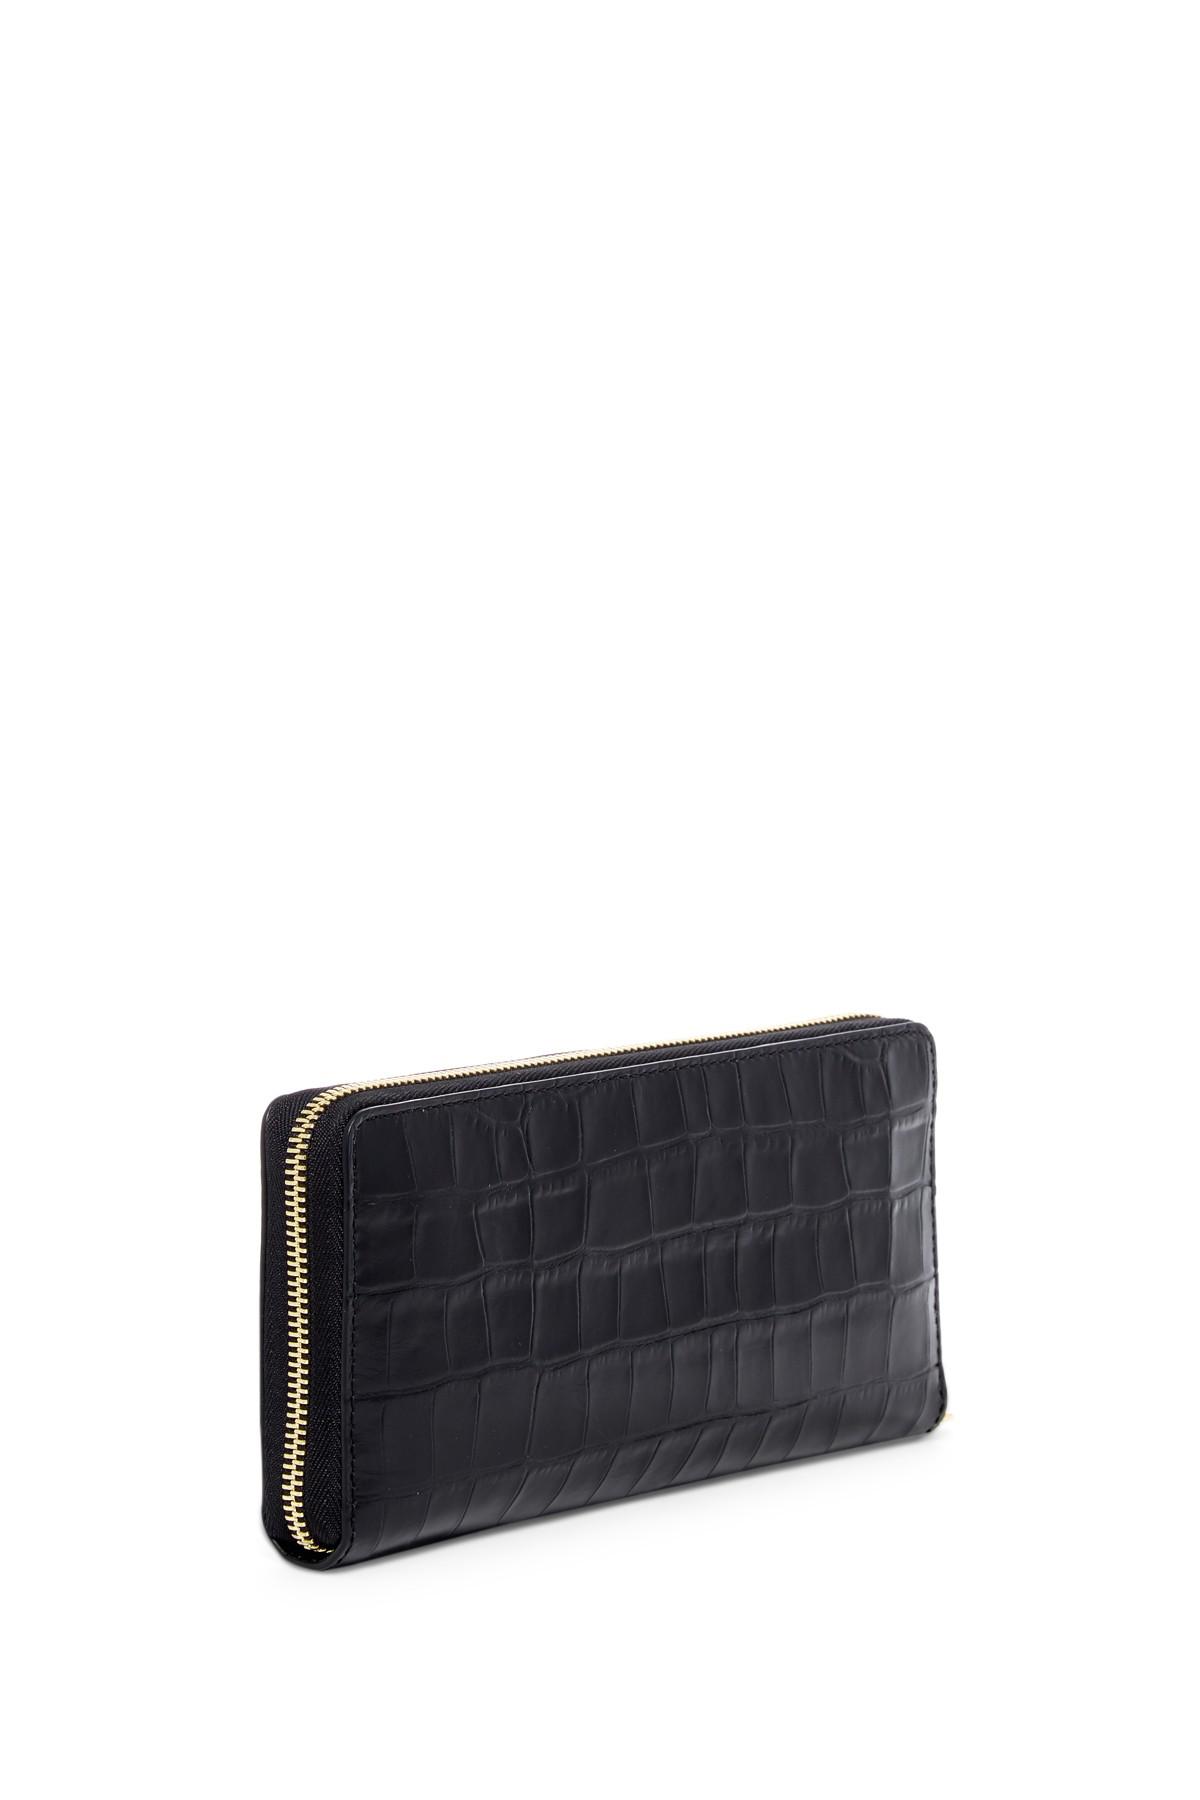 michael kors black wallet